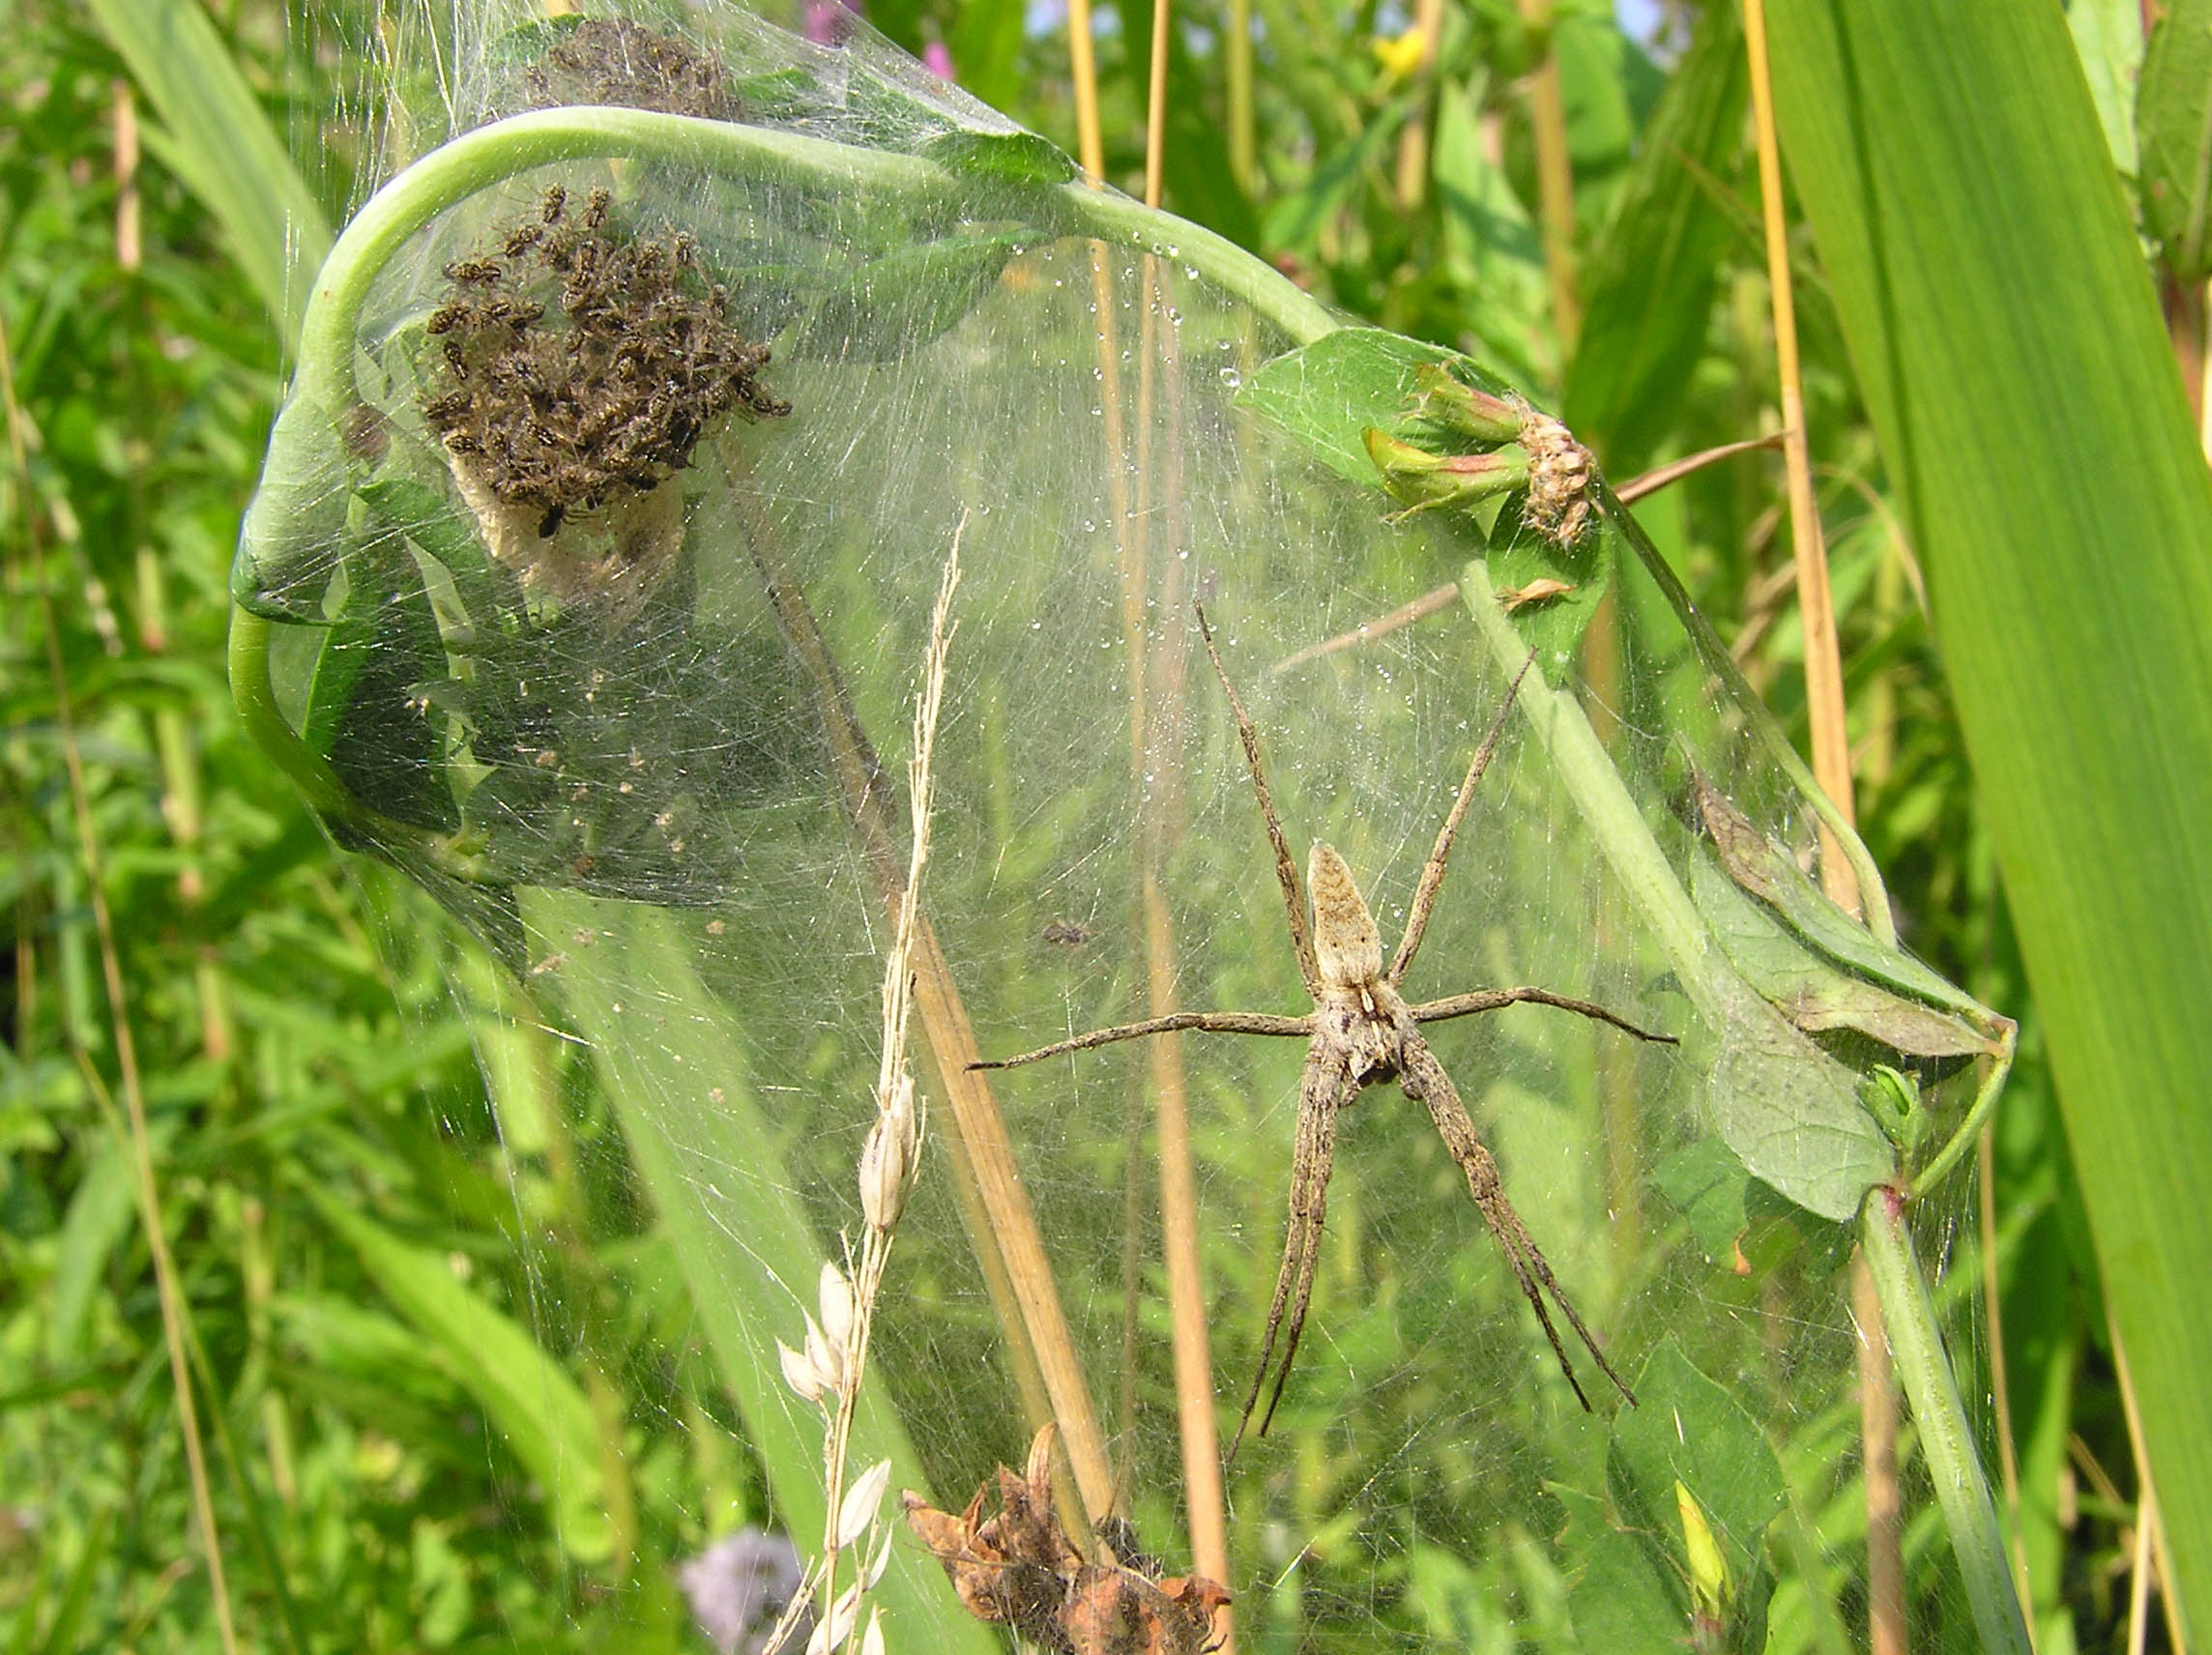 Female Pisaura mirabilis guarding spiderlings in her nursery